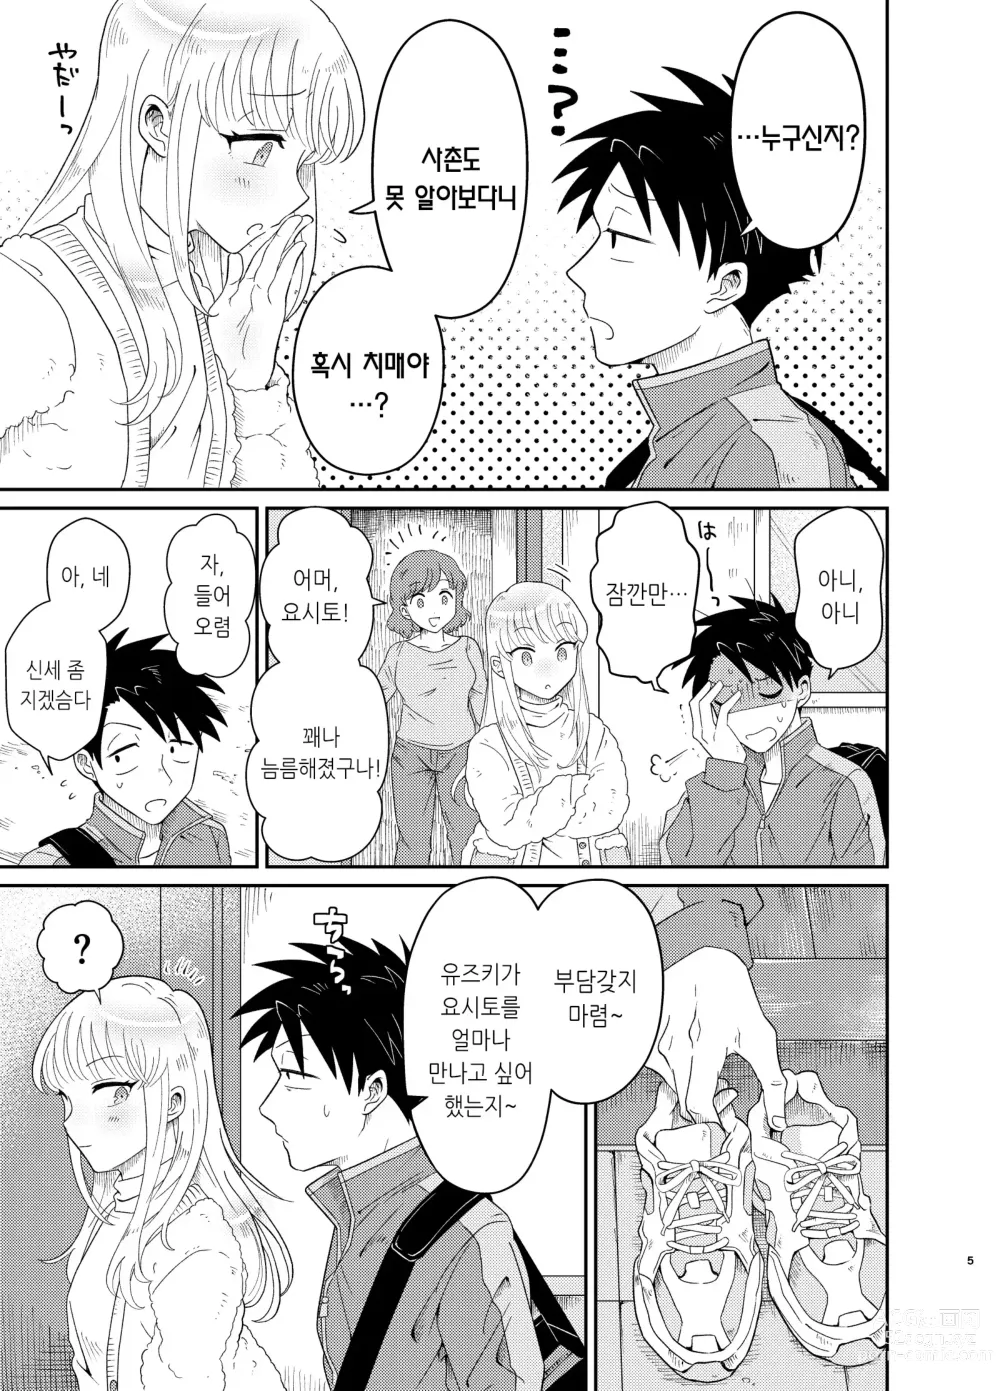 Page 5 of doujinshi 엄청 귀엽고 야한 사촌은 좋아하세요?